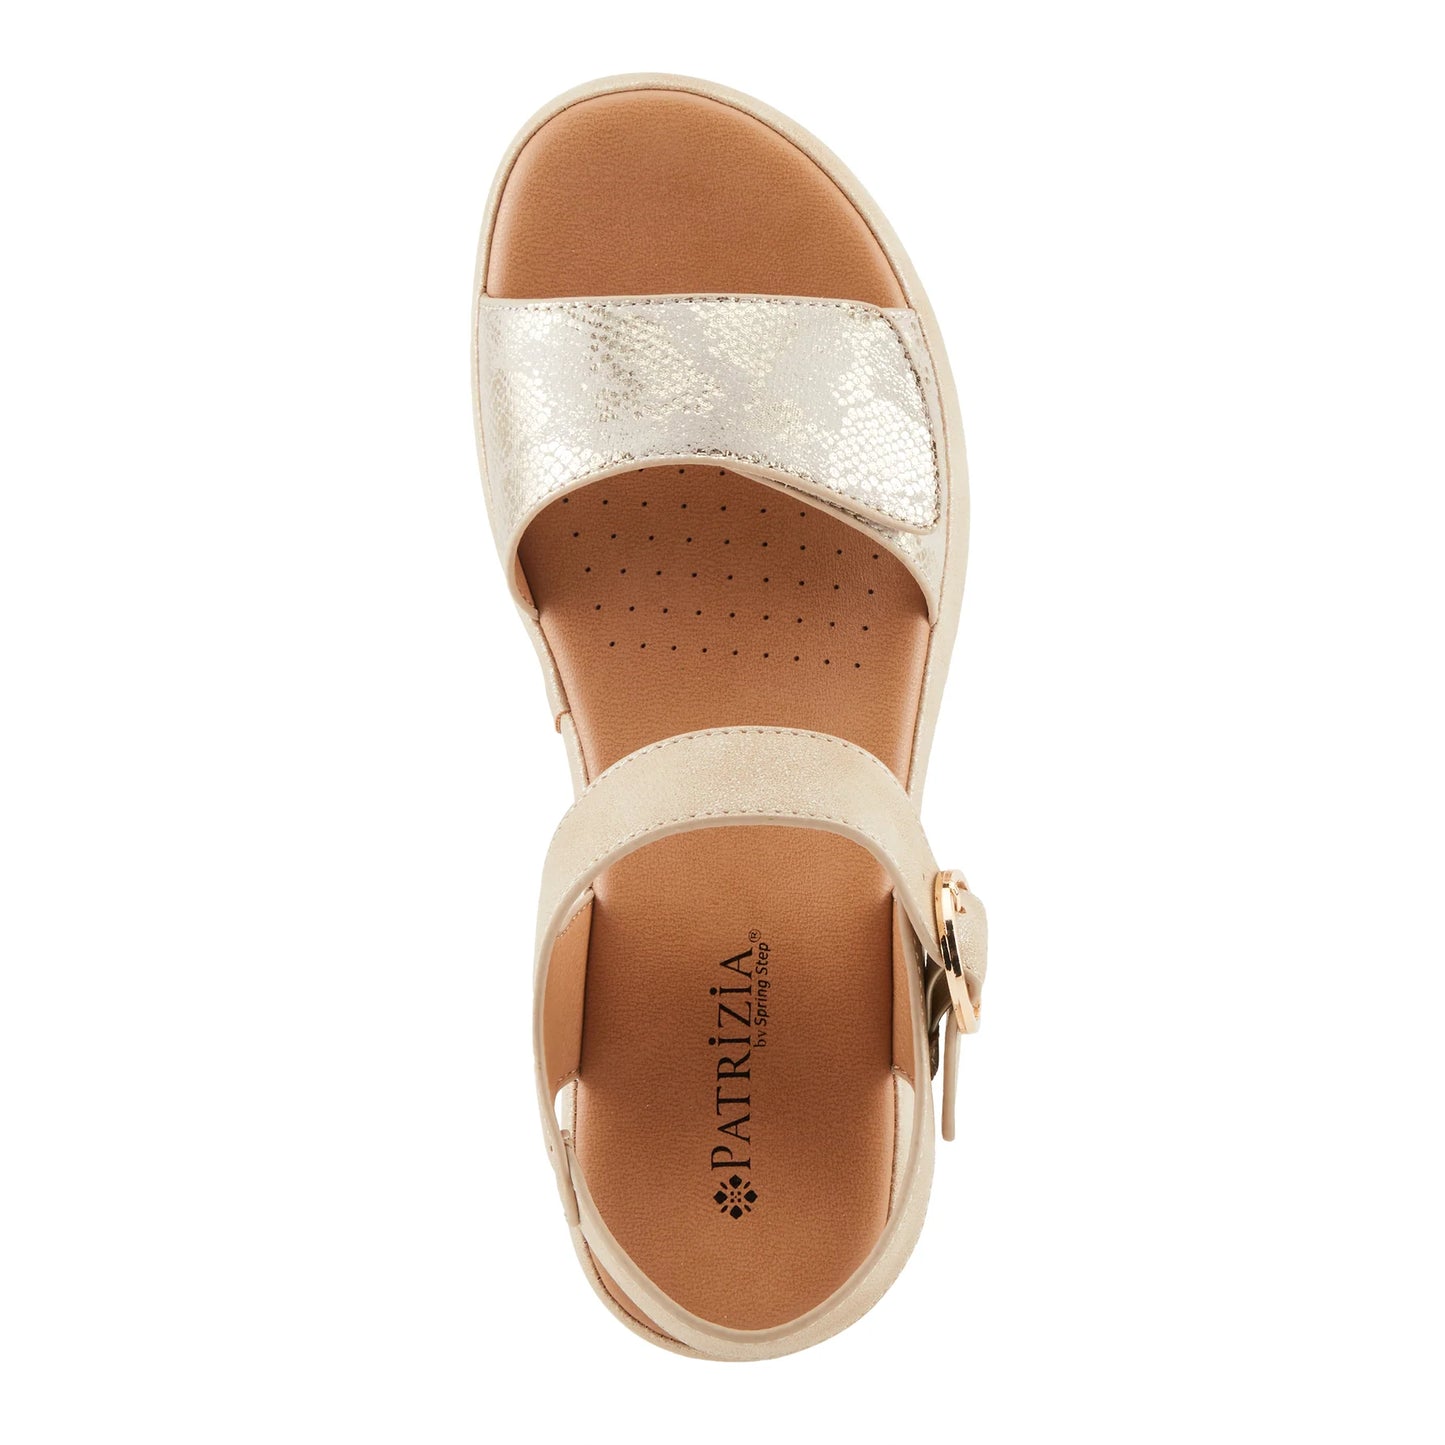 Patrizia by Spring Step Women's Finola Sandals - Soft Gold